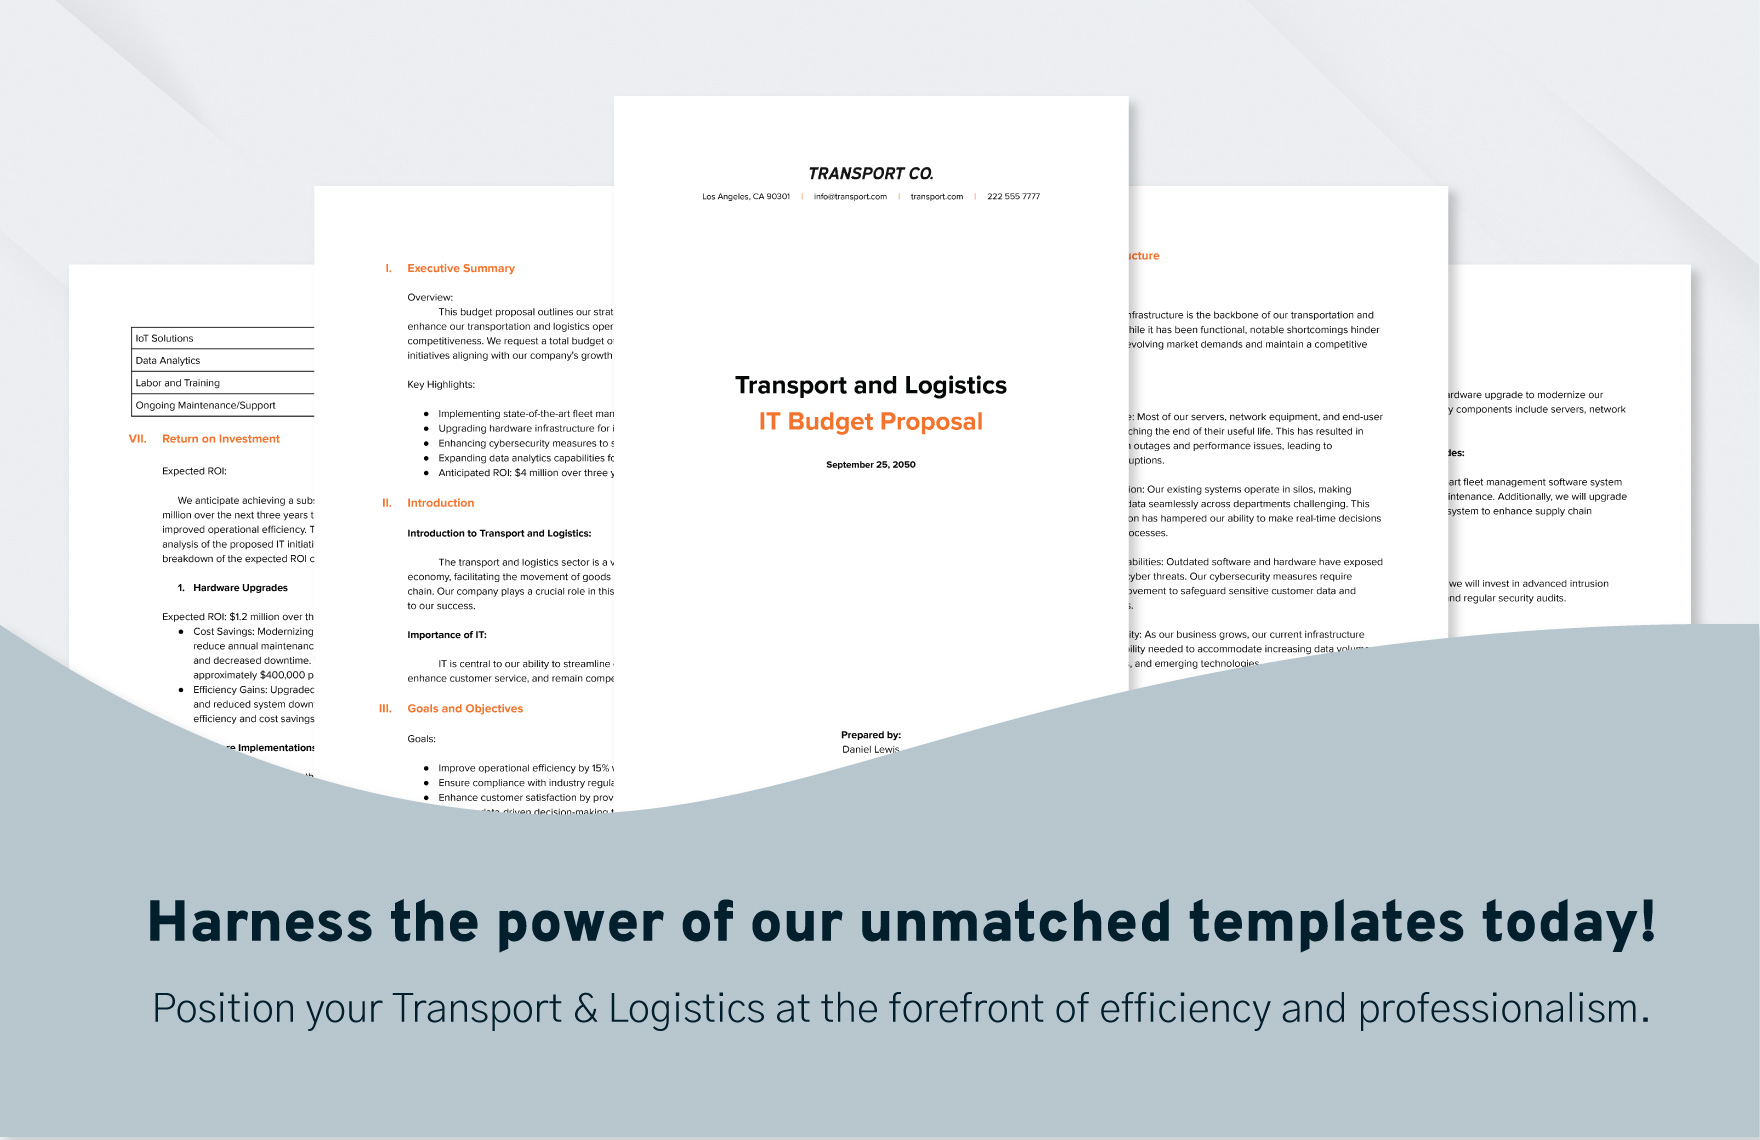 Transport and Logistics IT Budget Proposal Template